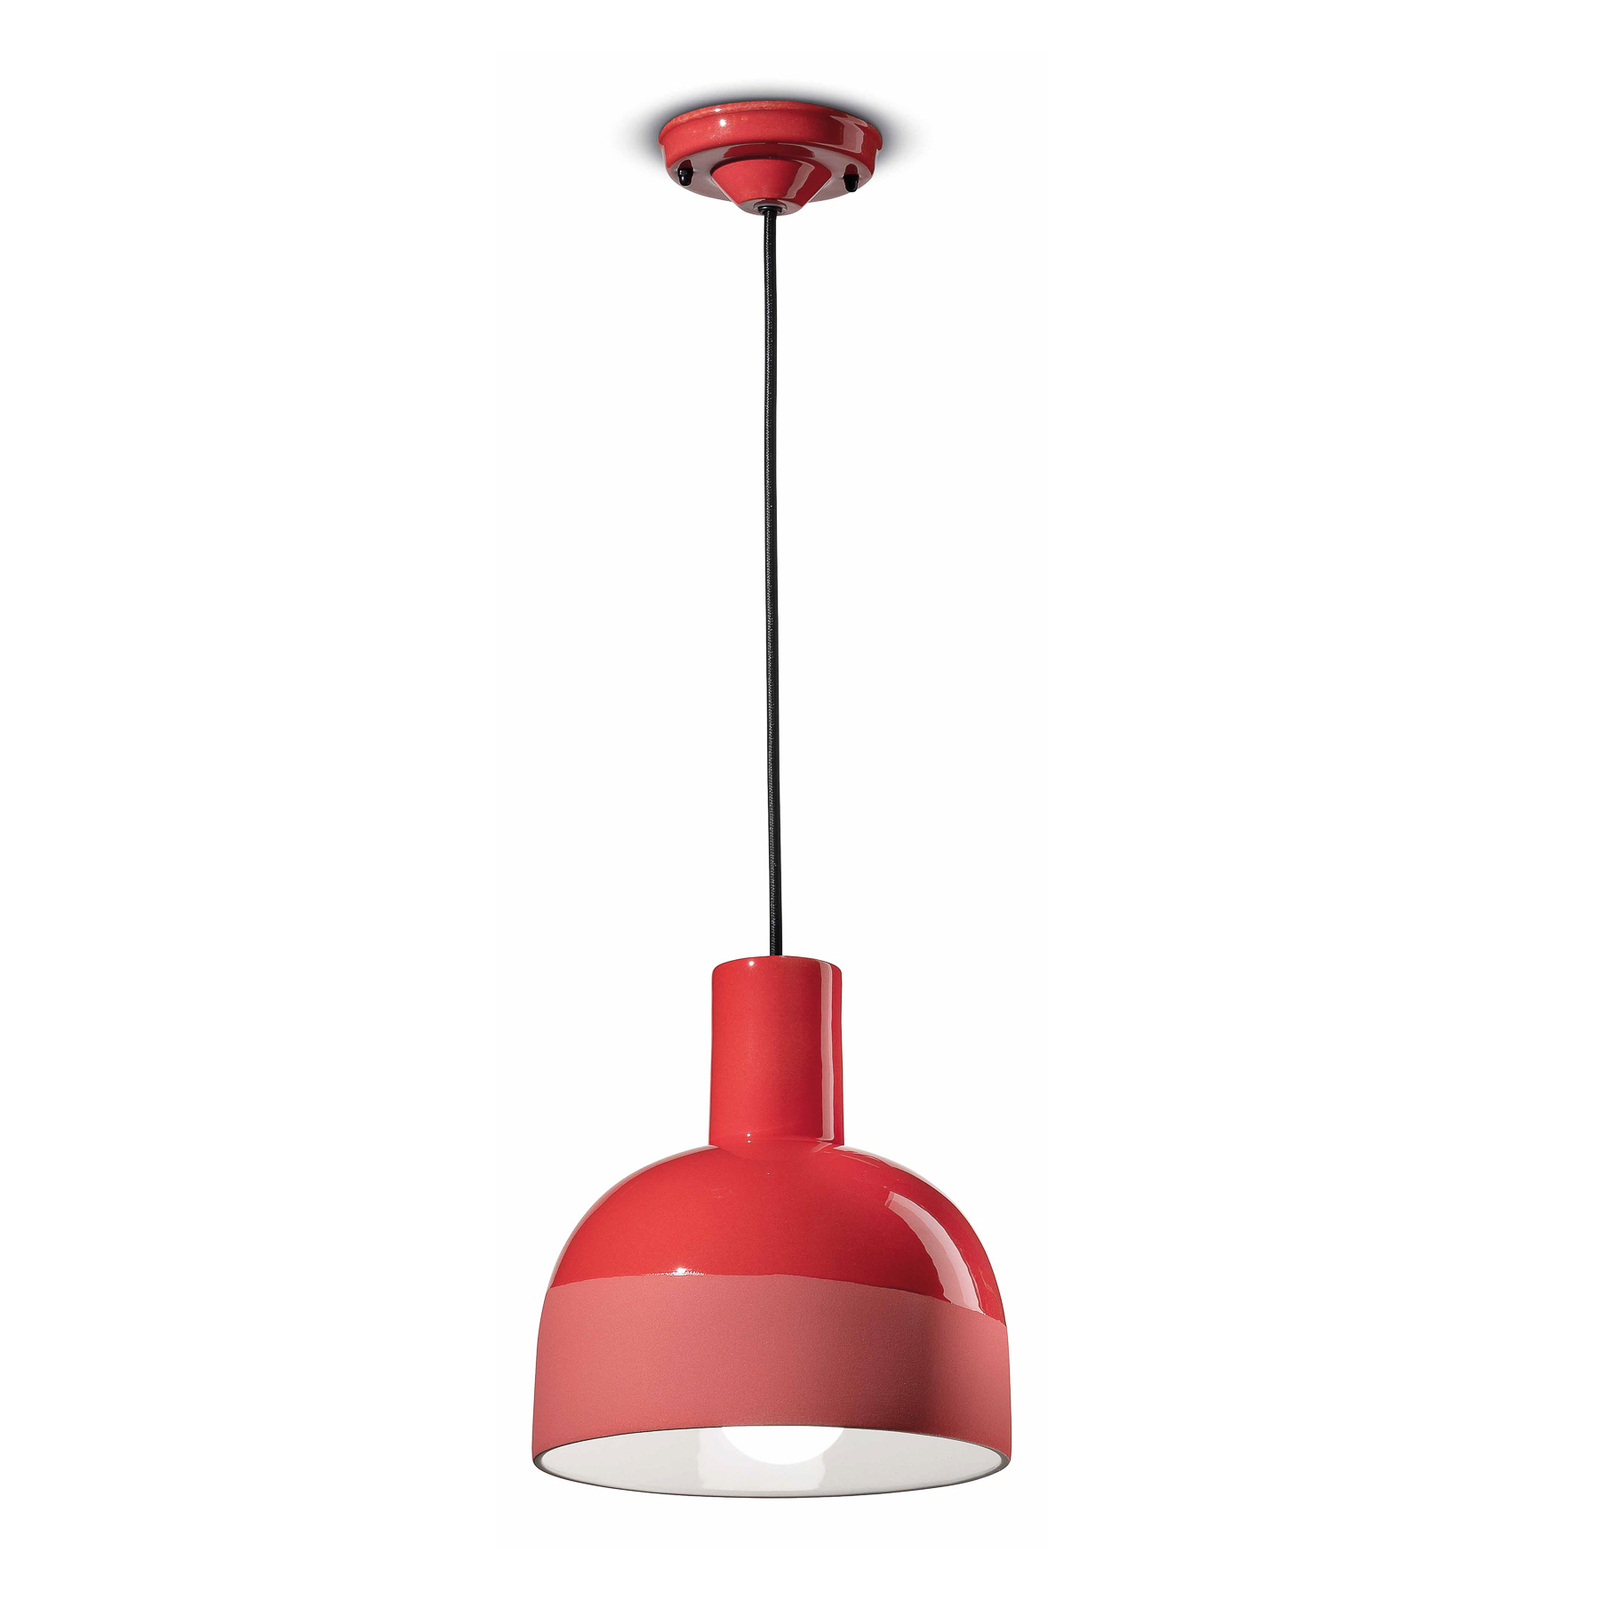 Caxixi hanglamp van keramiek, rood